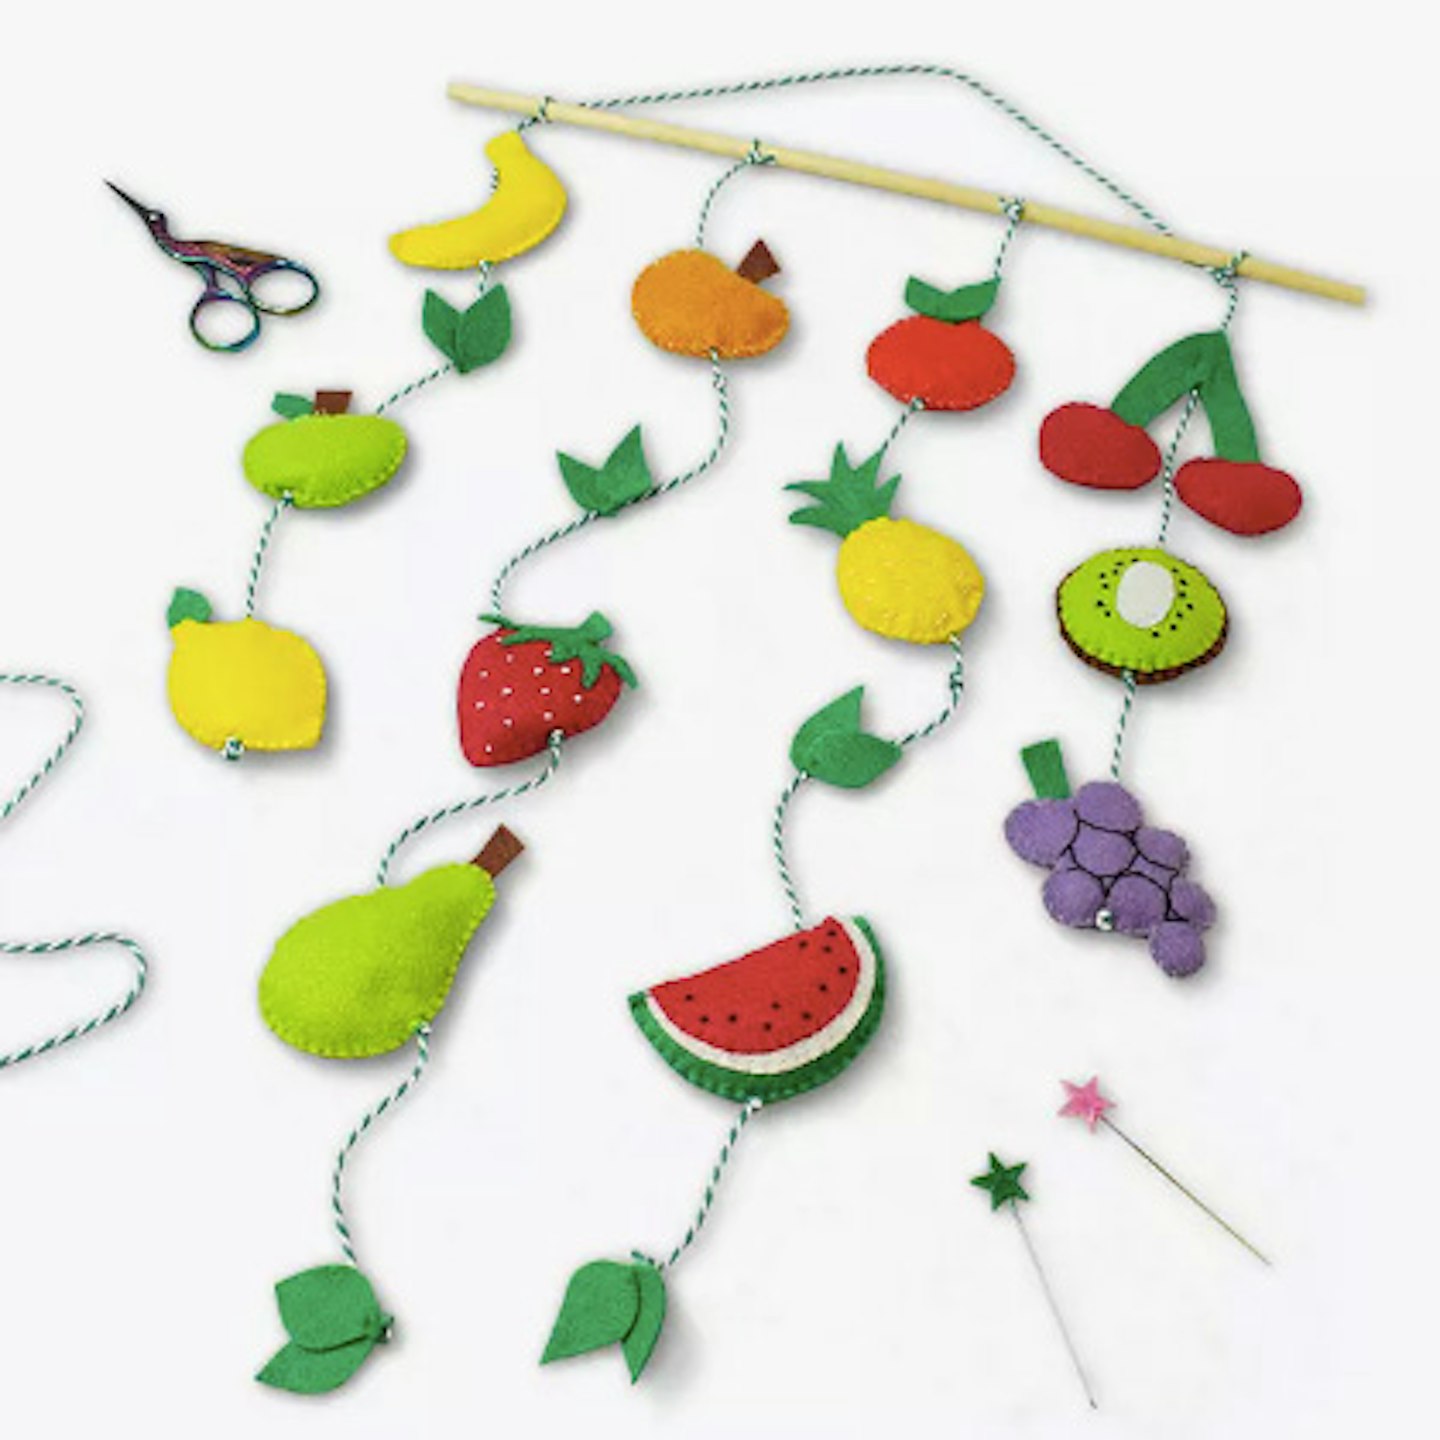 The Make Arcade Fruit Wall Hanging Sewing Kit